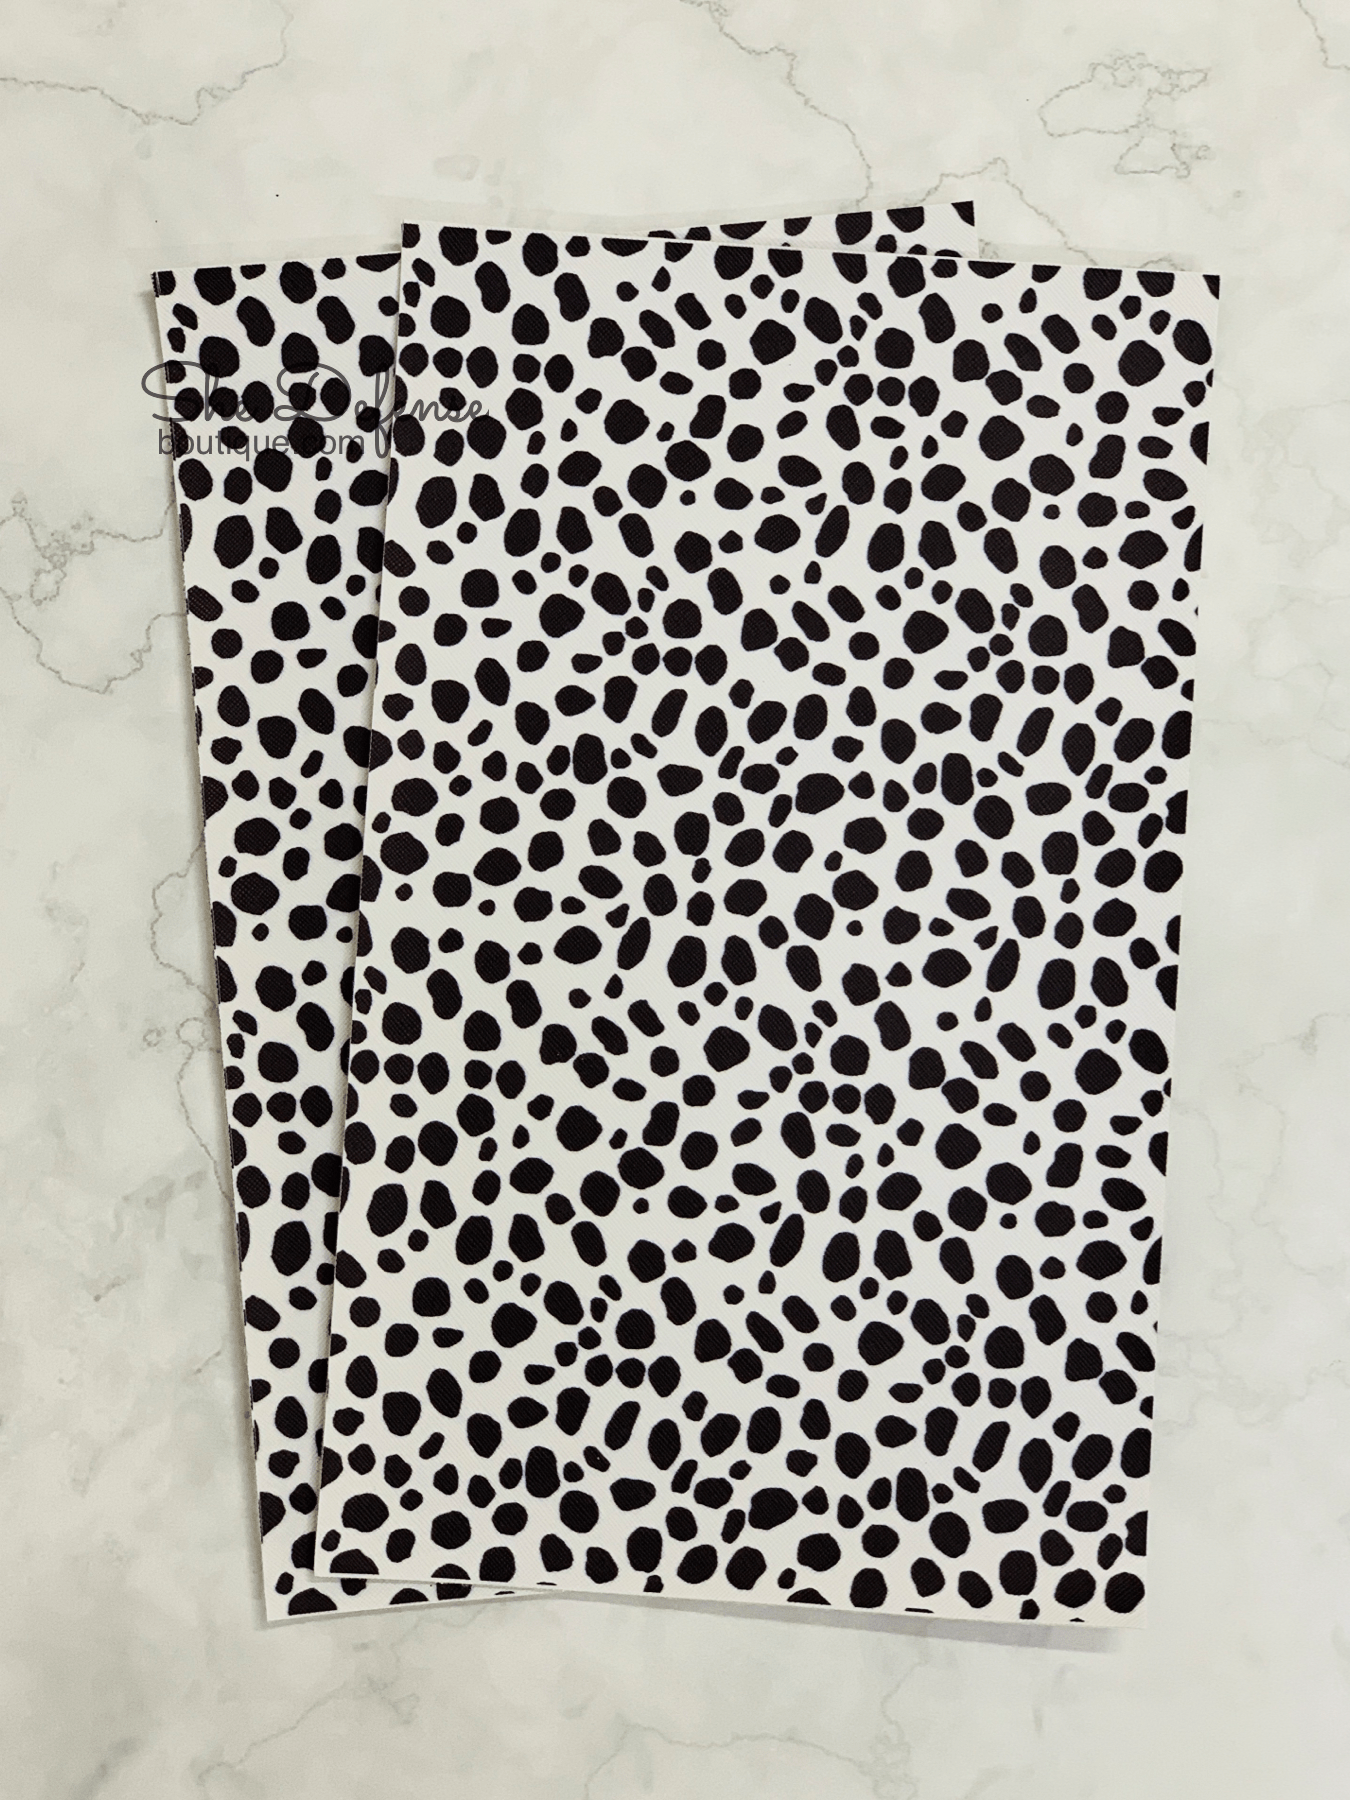 New 1pc Faux Leather Sheet F096 Dalmatian Dots Print